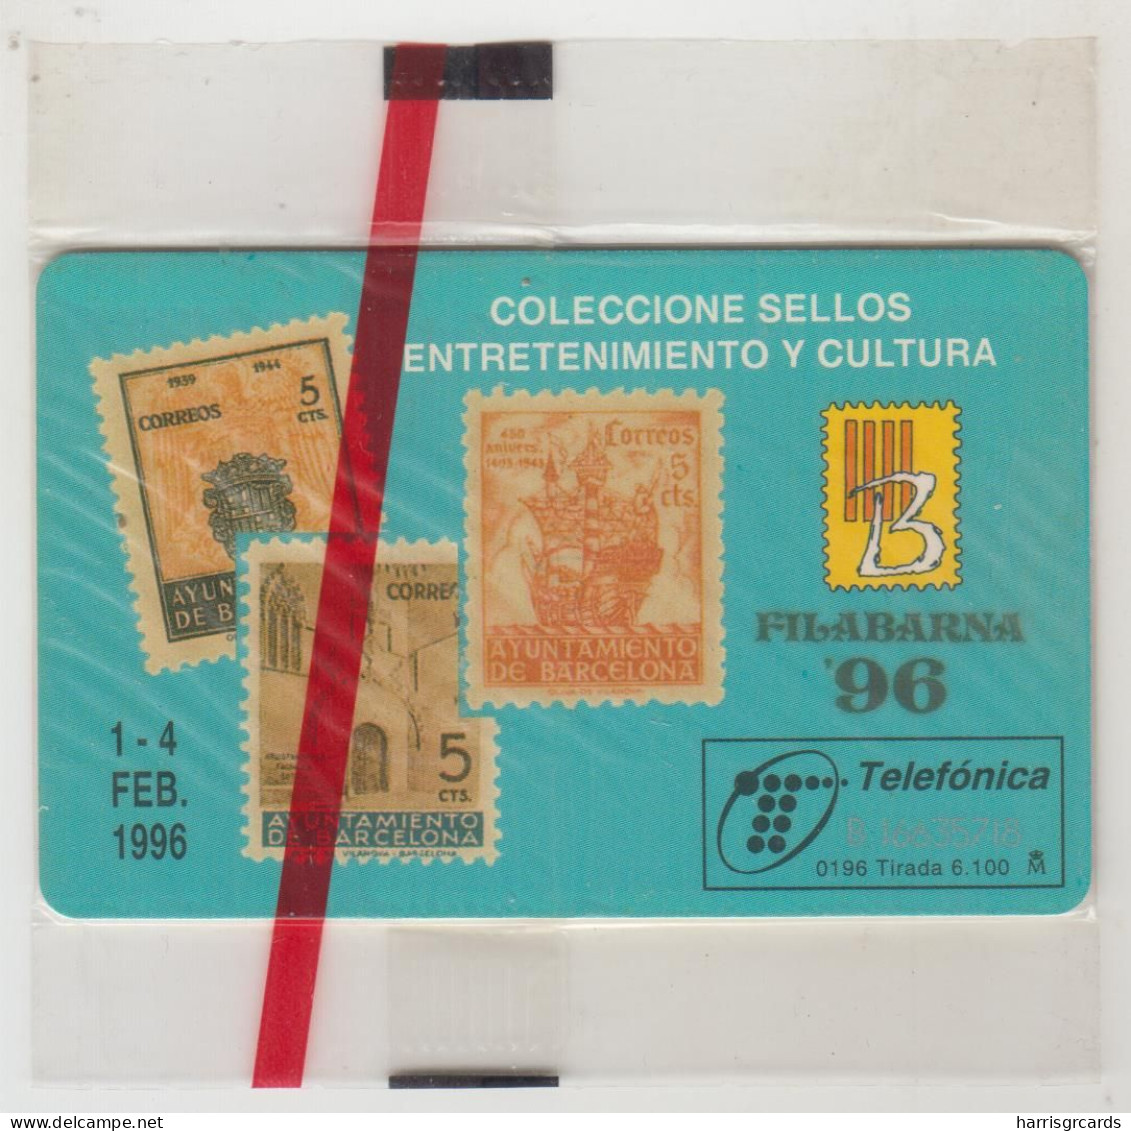 SPAIN - Filabarna'96 (Tram/Stamps), P-173, 01/96, Tirage 6.100, Mint - Emisiones Privadas